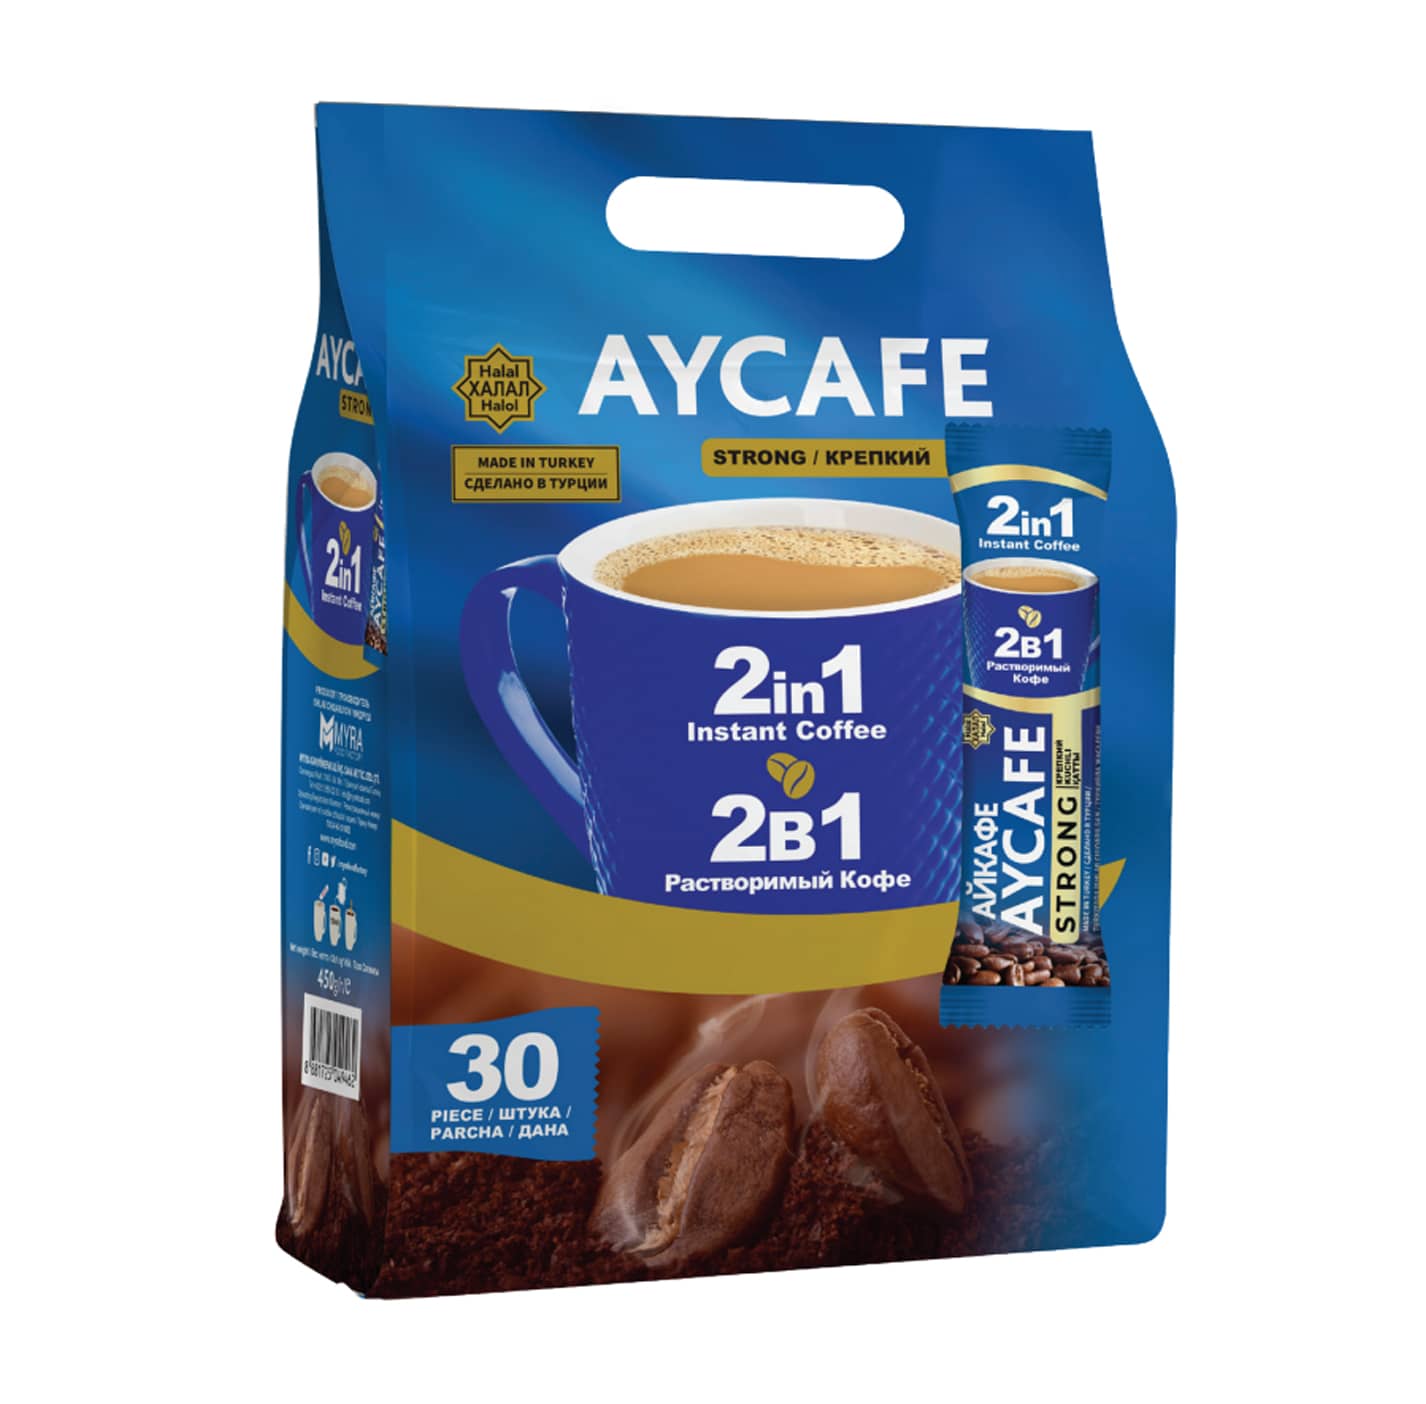 Aycafe 2in1 Stick Coffee 30 Piece